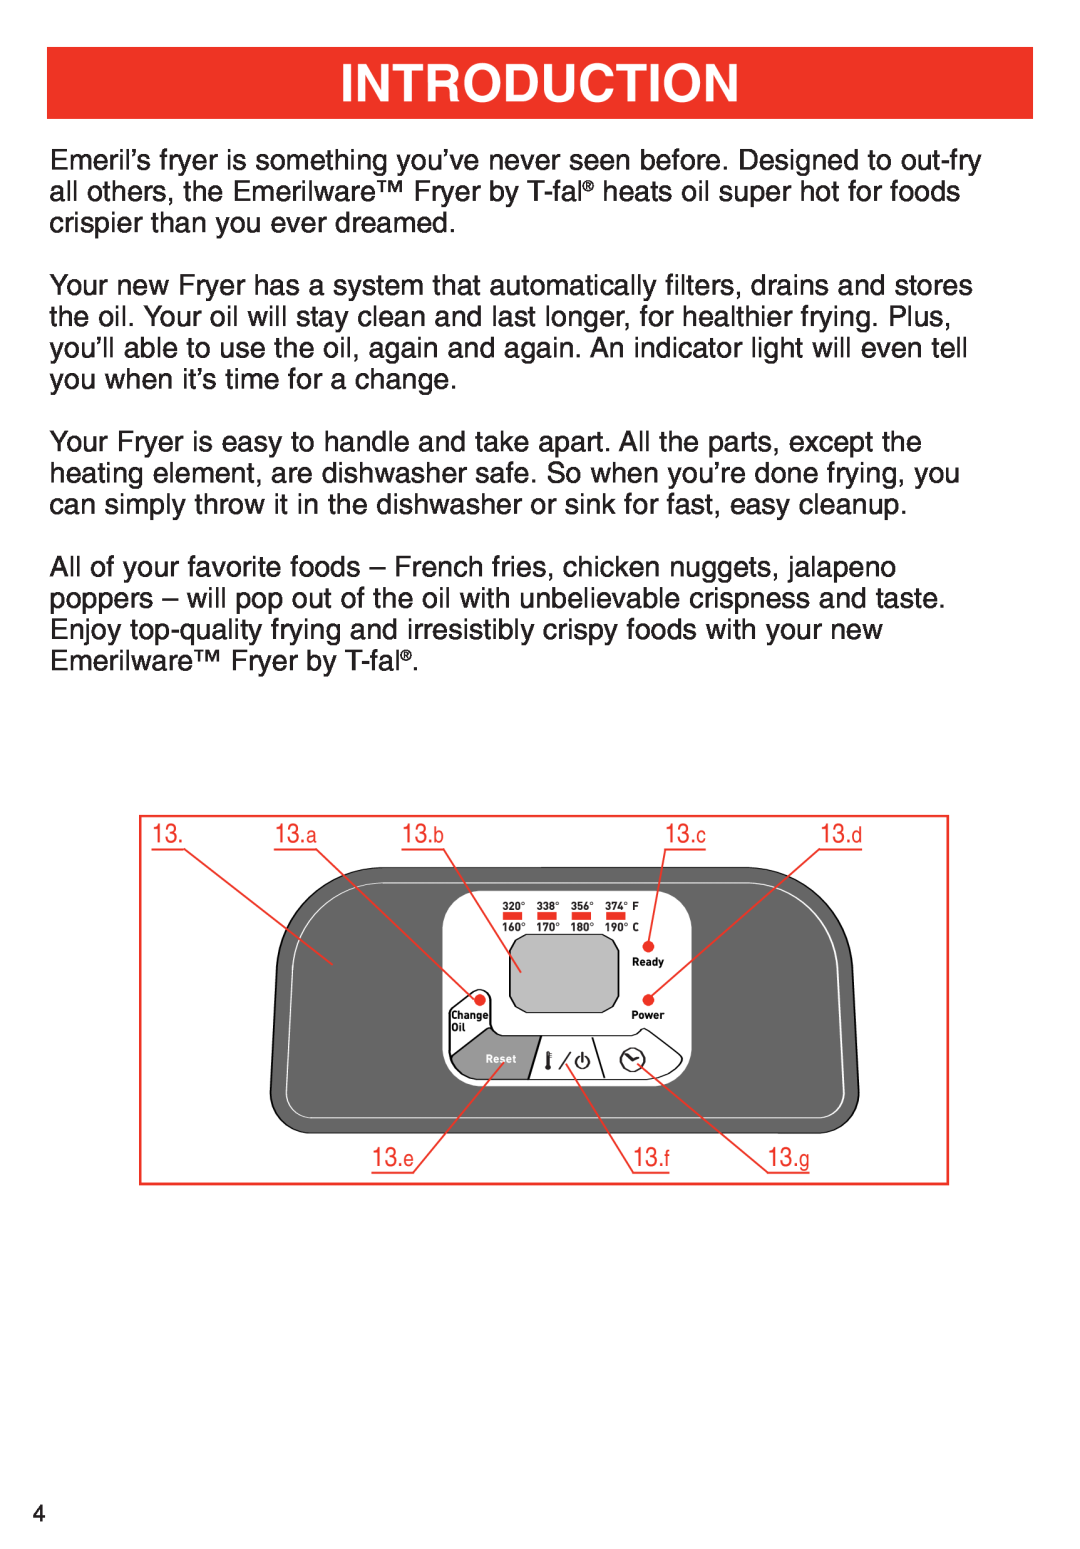 T-Fal Deep Fryer manual Introduction, 13. a, 13. b, 13. c, 13. e, 13. f, 13. g 